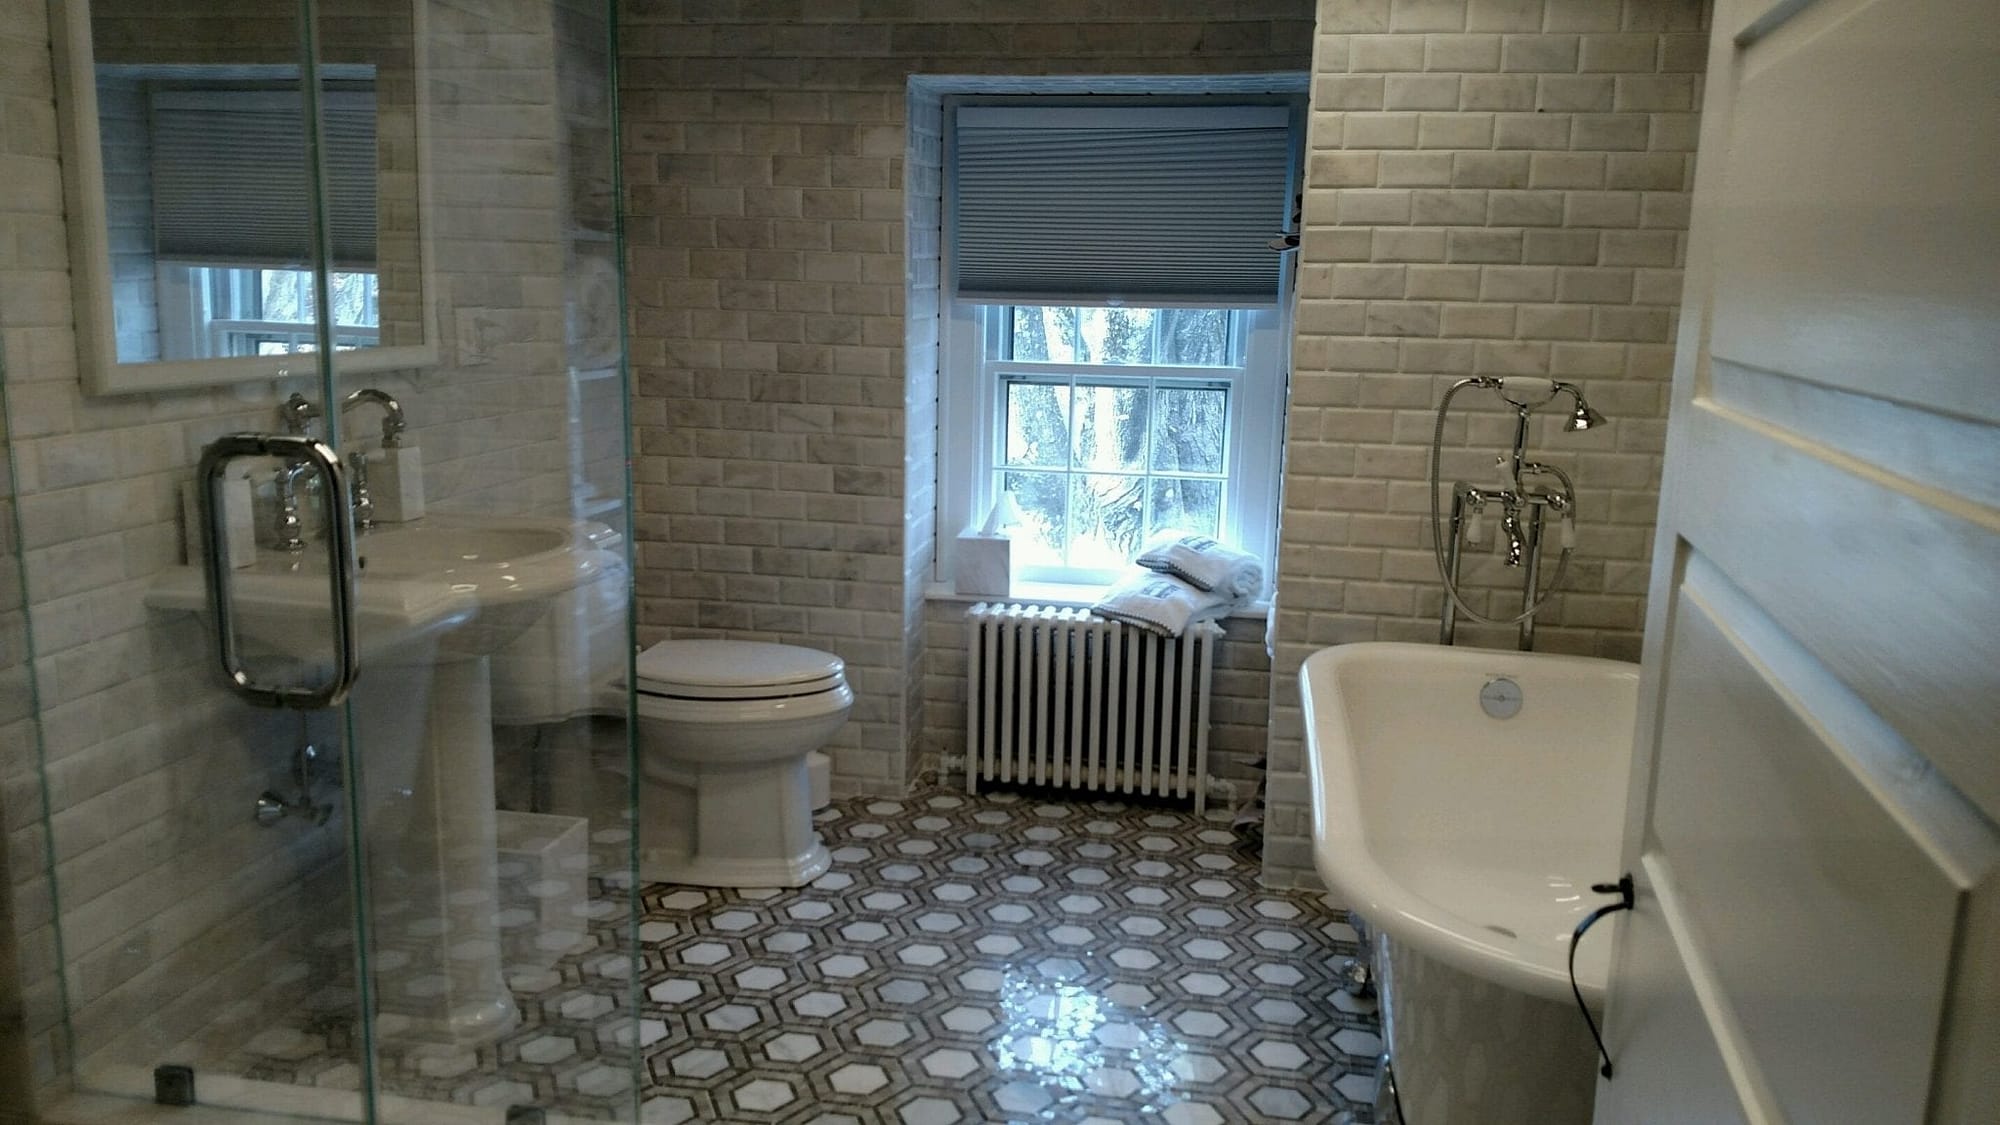 Remodeled Bathroom With Tile Floor